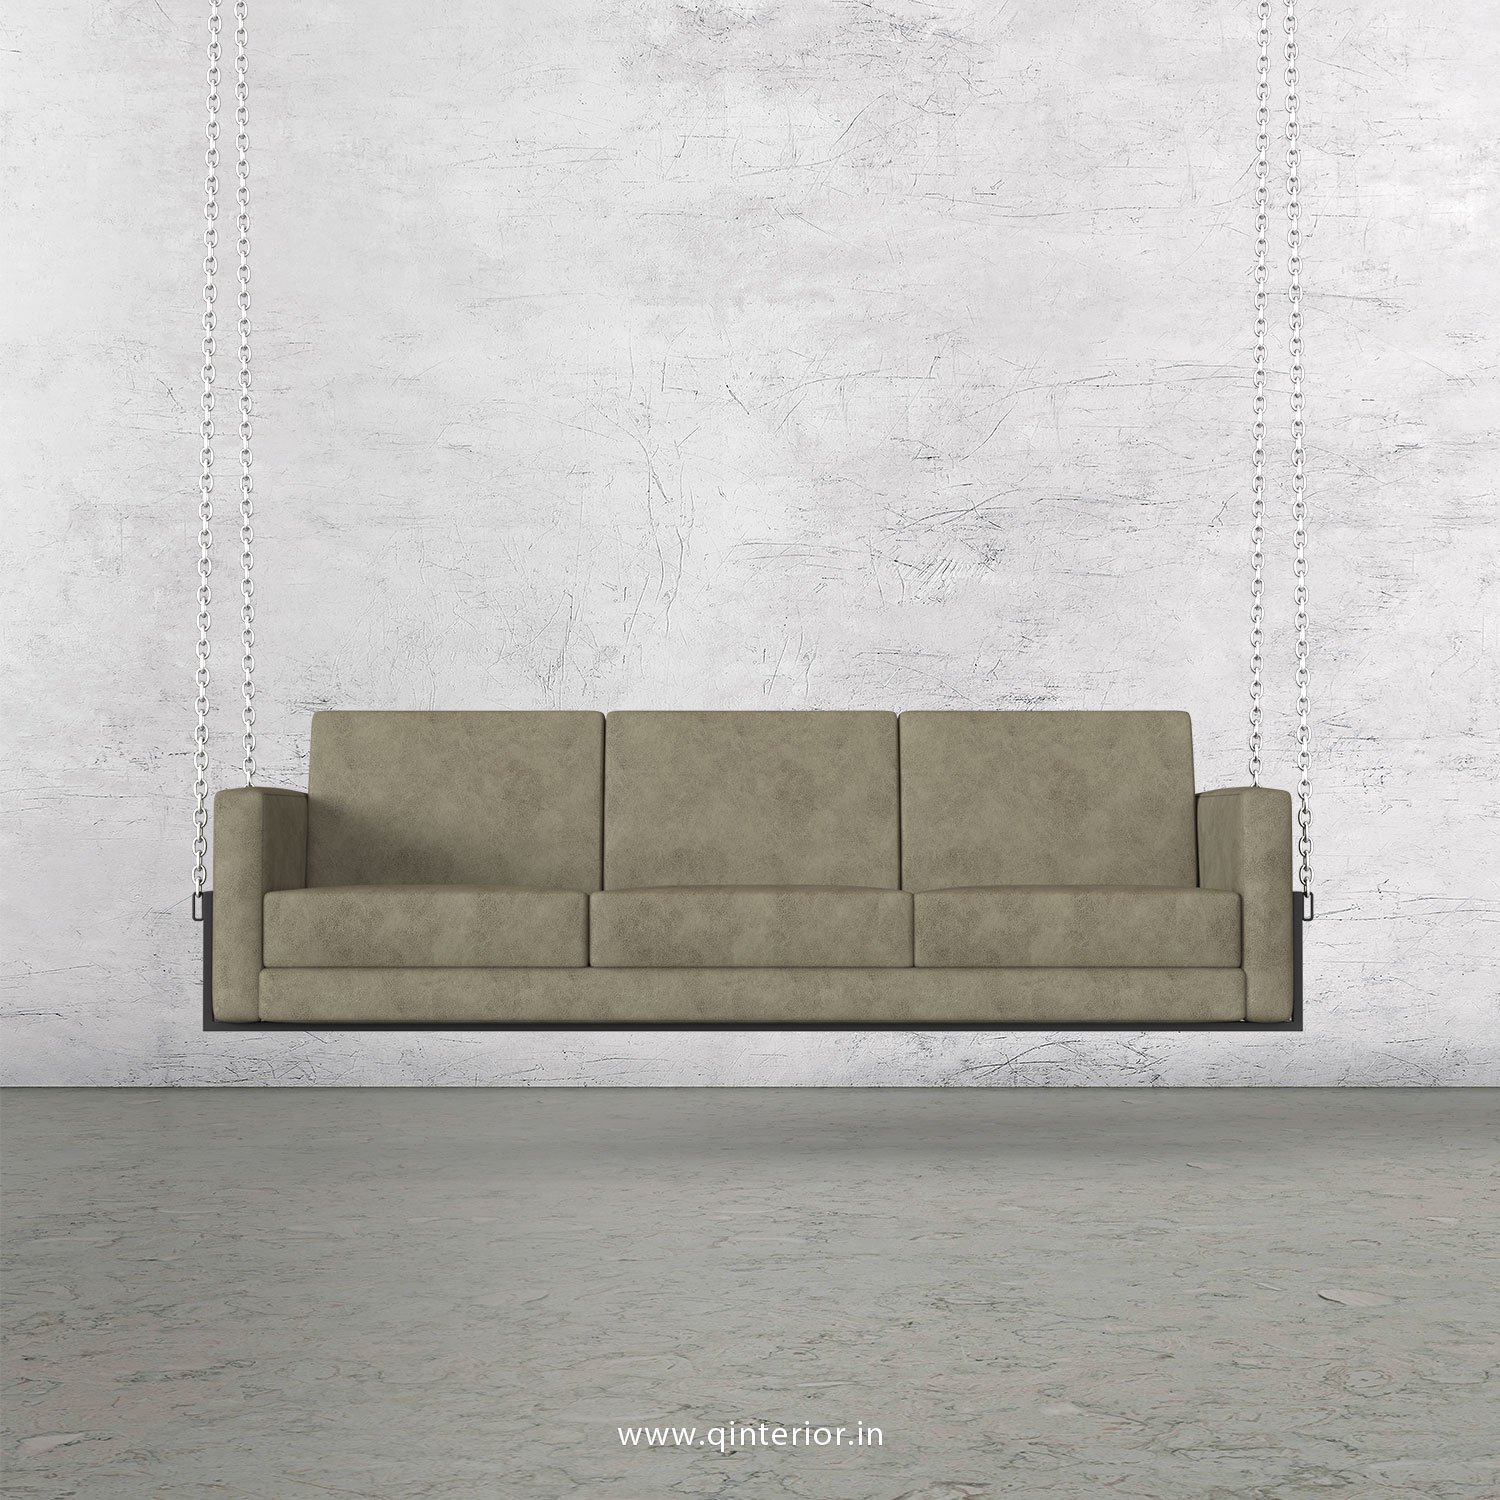 NIRVANA 3 Seater Swing Sofa in Fab Leather Fabric - SSF001 FL06